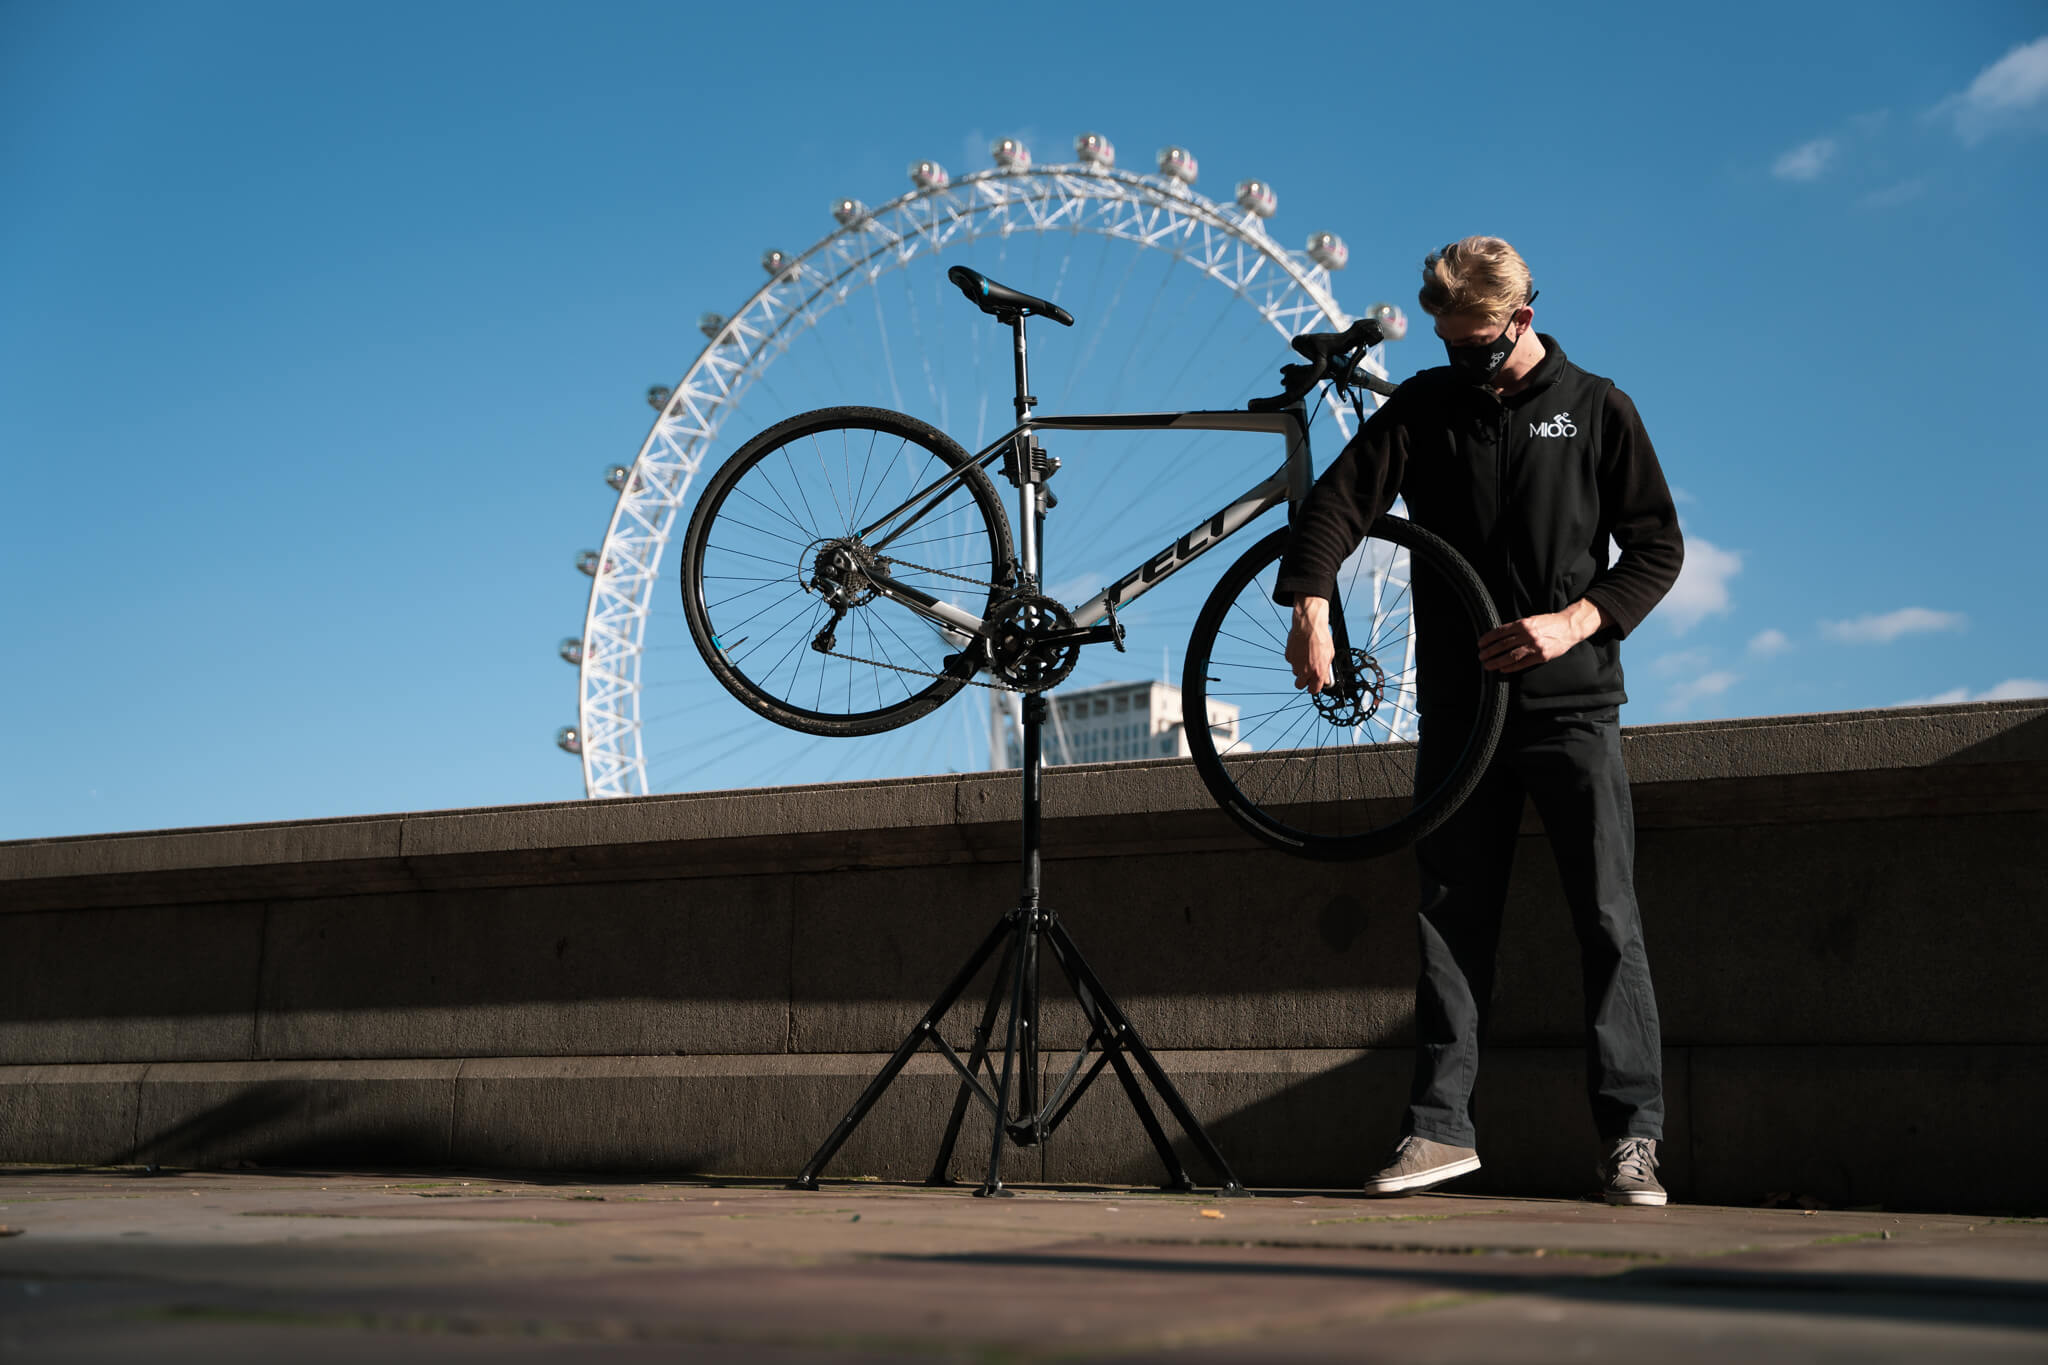 Battling Corona with wheels, free bike service for NHS staff